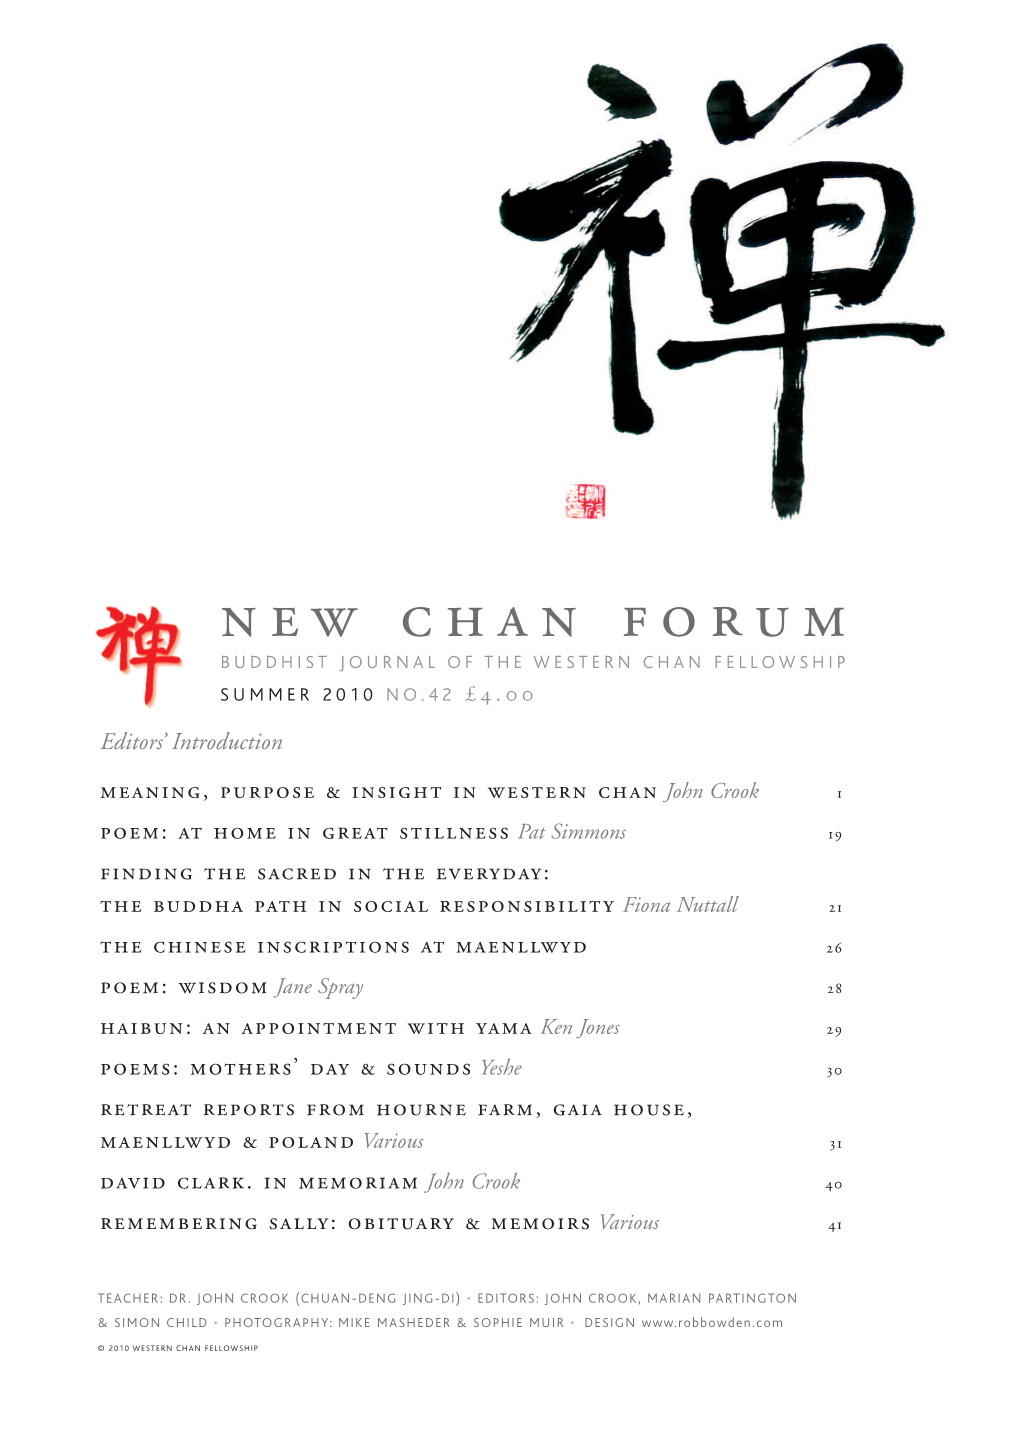 New Chan Forum BUDDHIST JOURNAL of the WESTERN CHAN FELLOWSHIP SUMMER 2010 NO.42 £4.00